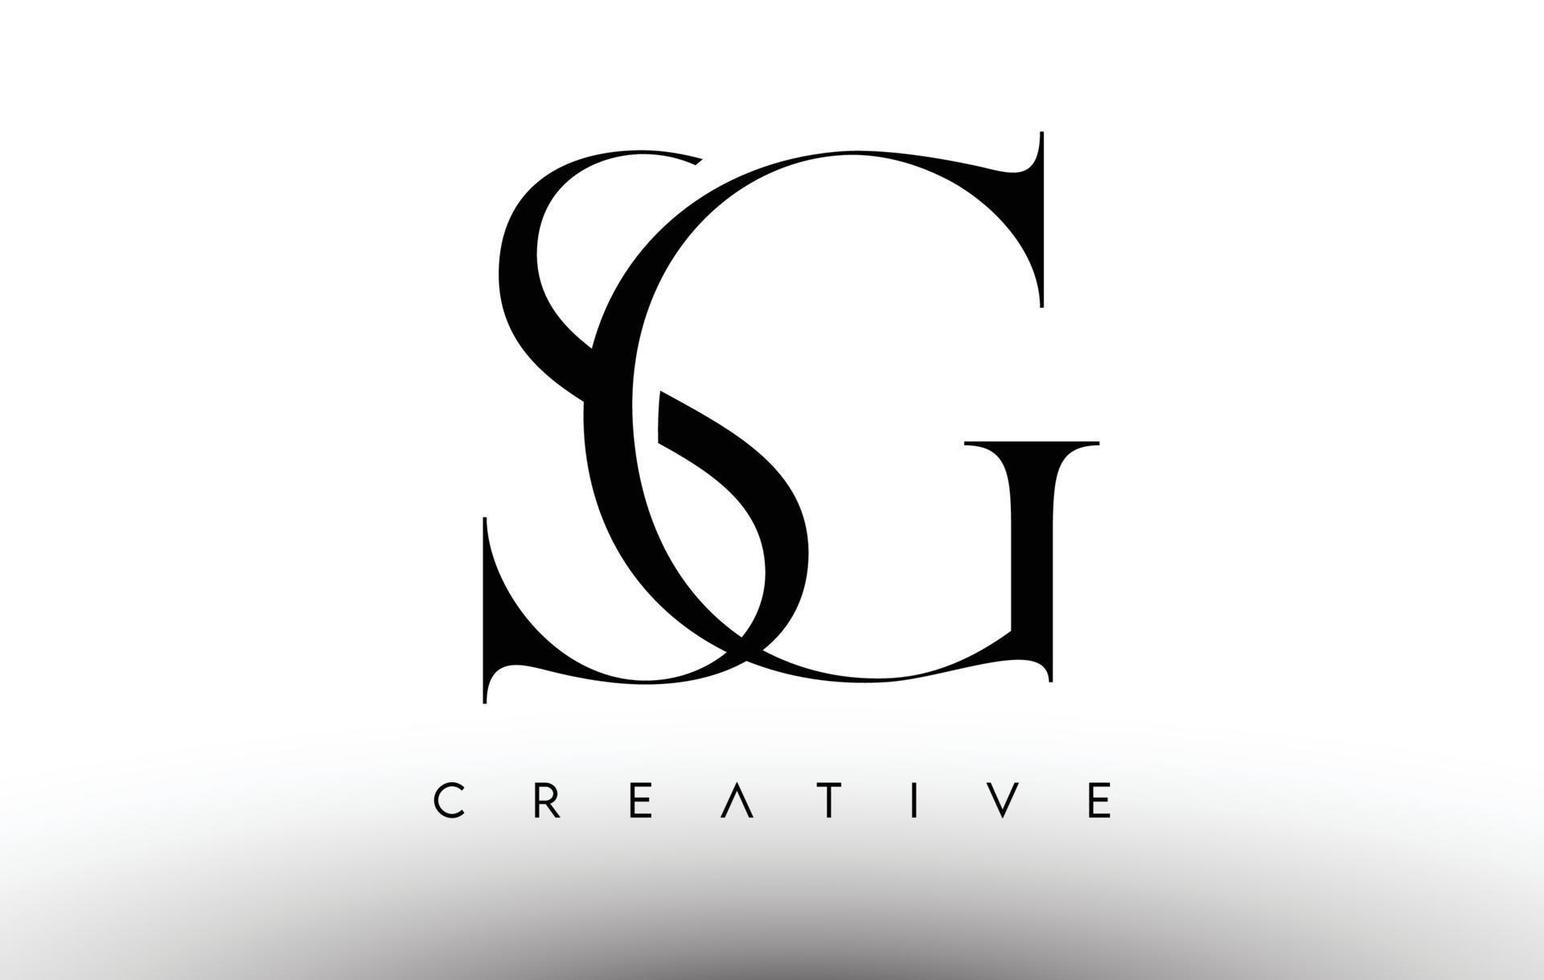 SG Minimalist Serif Modern Letter Logo in Black and White. SG Creative Serif Logo Design Icon Vector